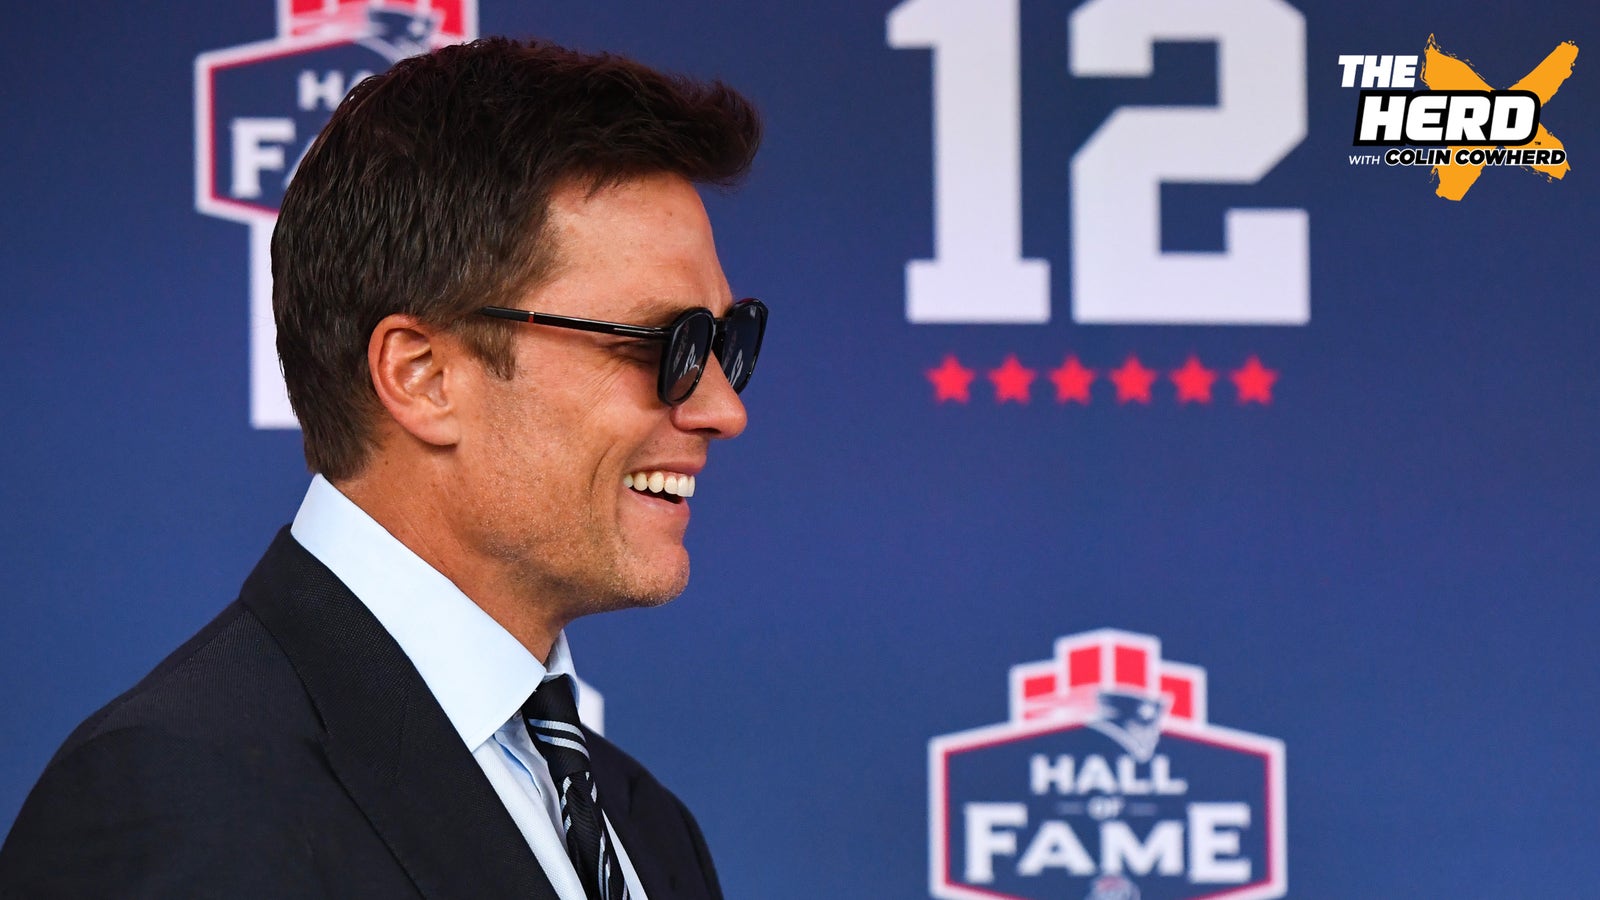 Tom Brady joins Colin Cowherd to talk Patriots, Belichick